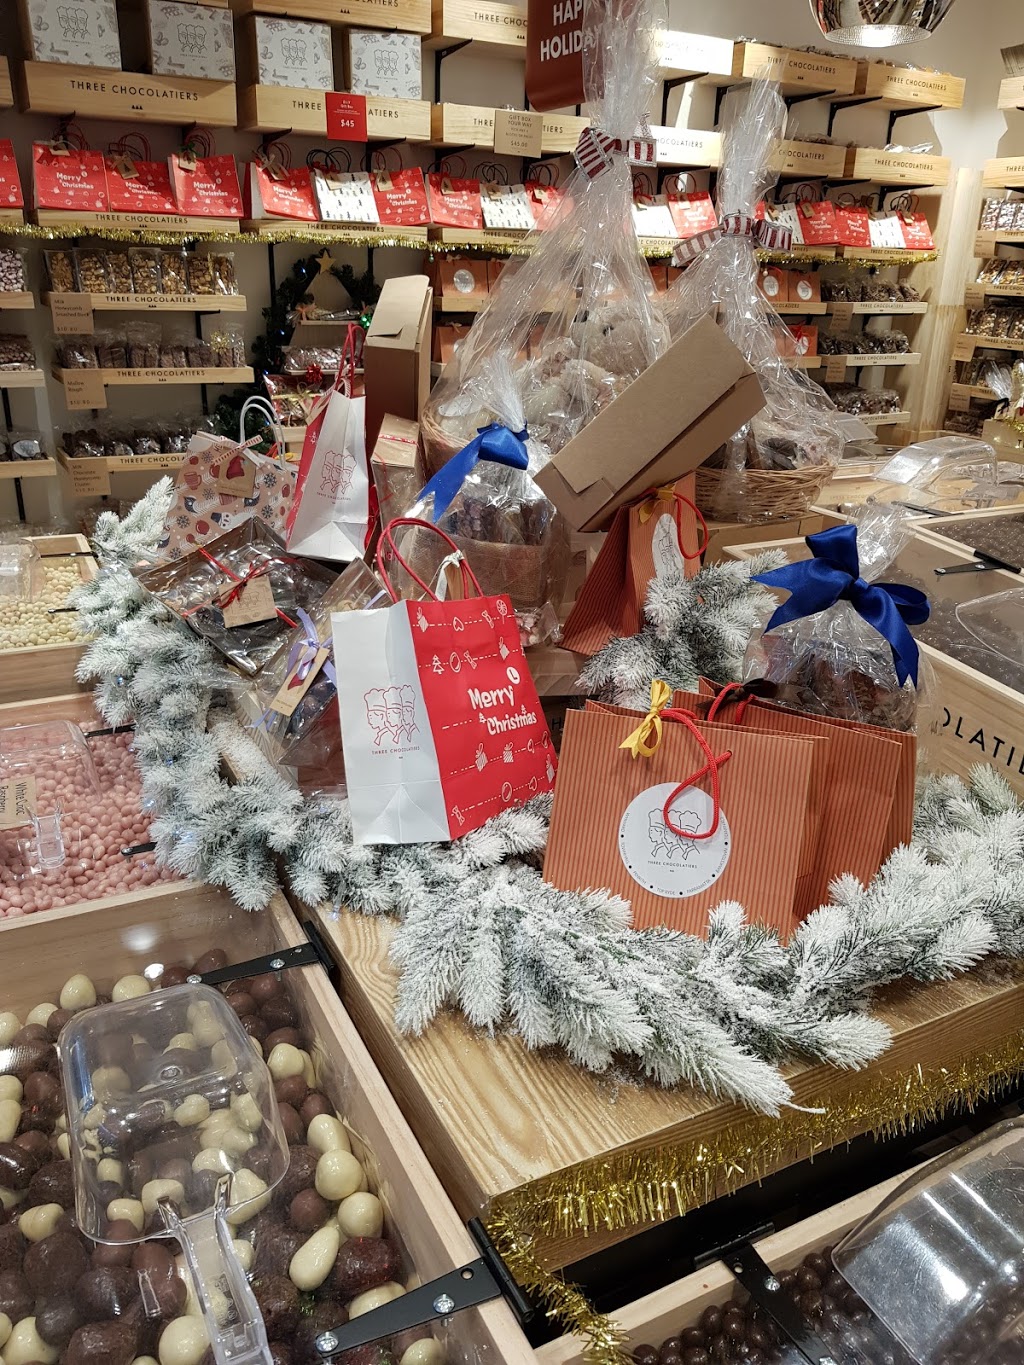 Three Chocolatiers | store | 004/585 High St, Penrith NSW 2750, Australia